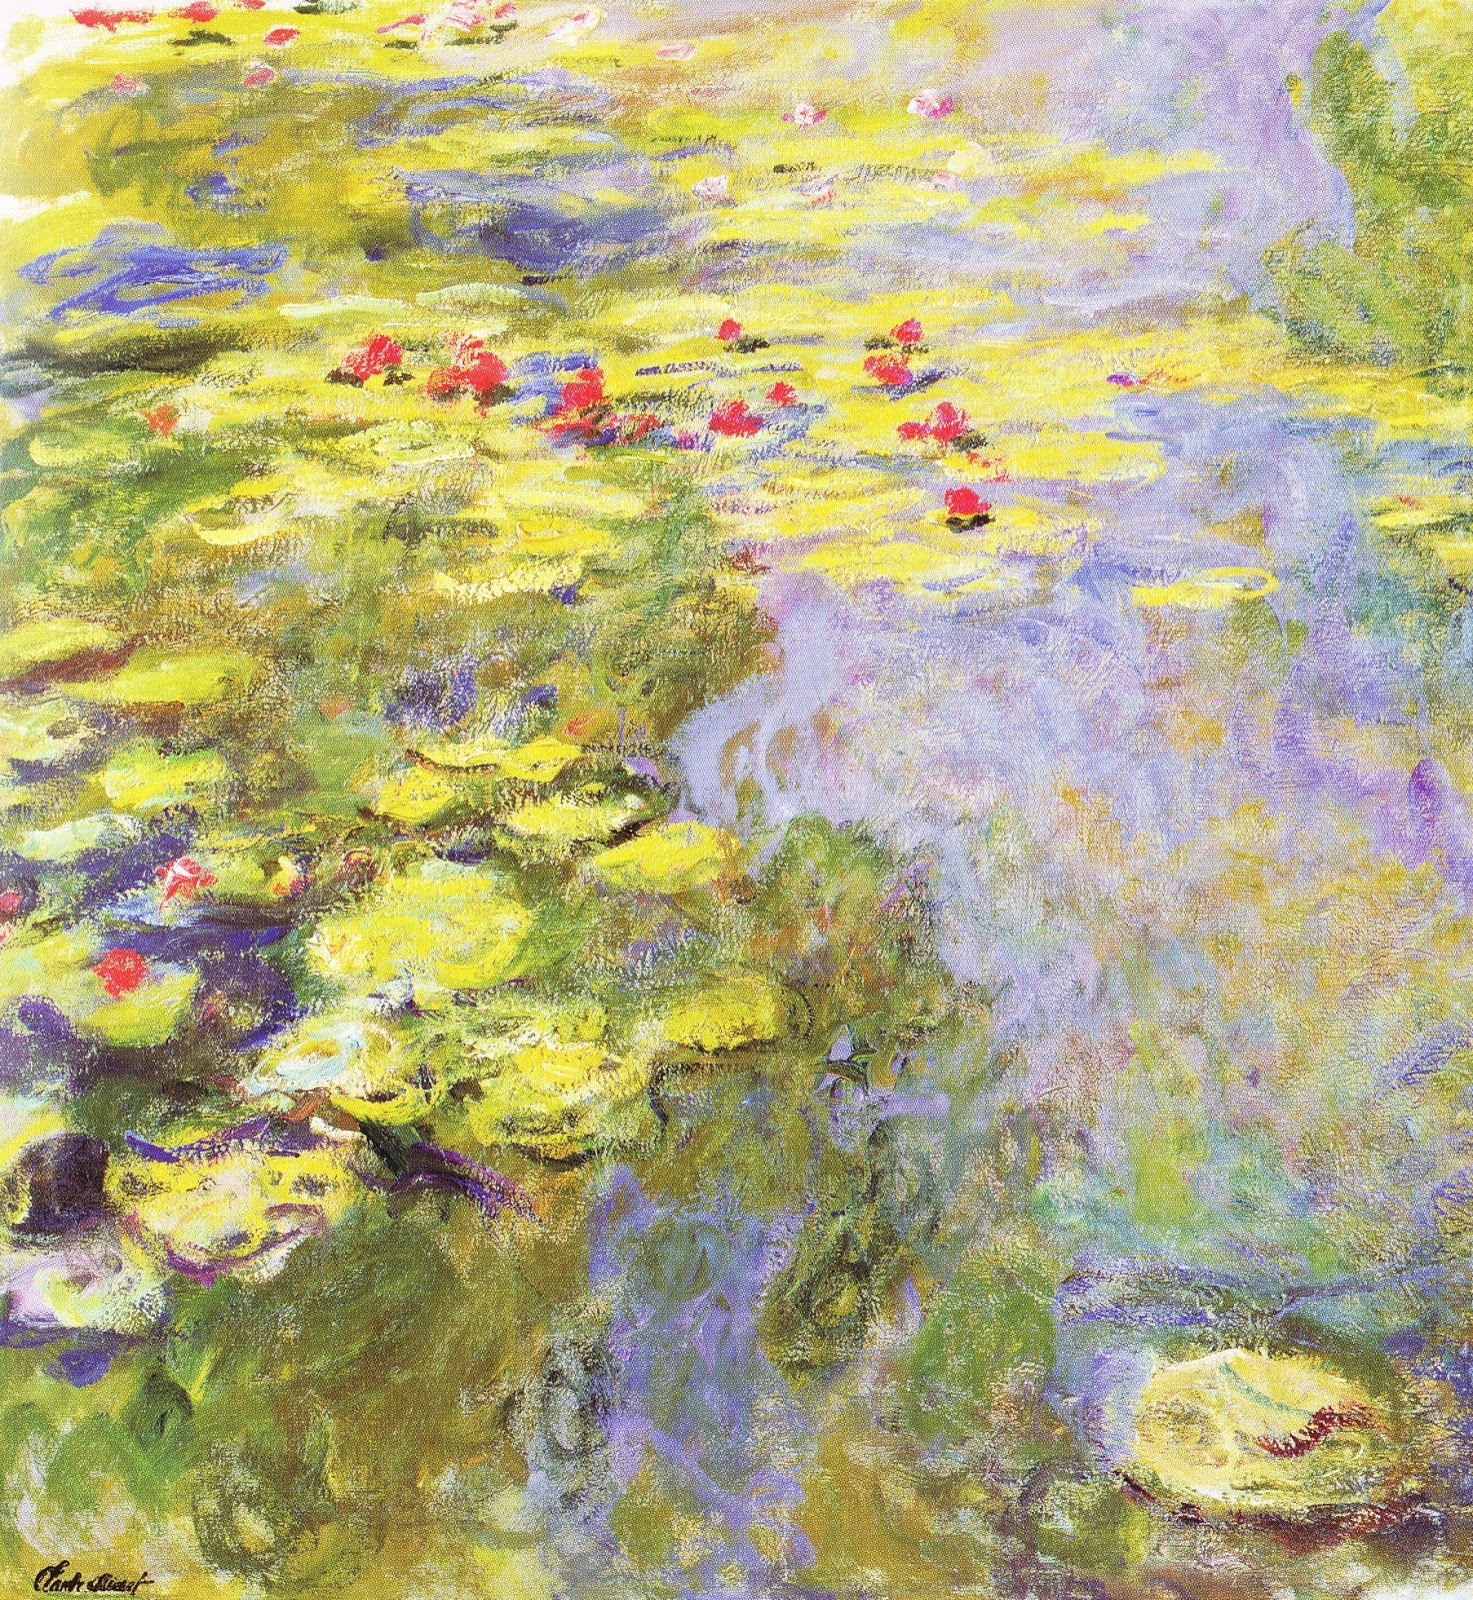 Claude+Monet-1840-1926 (423).jpg